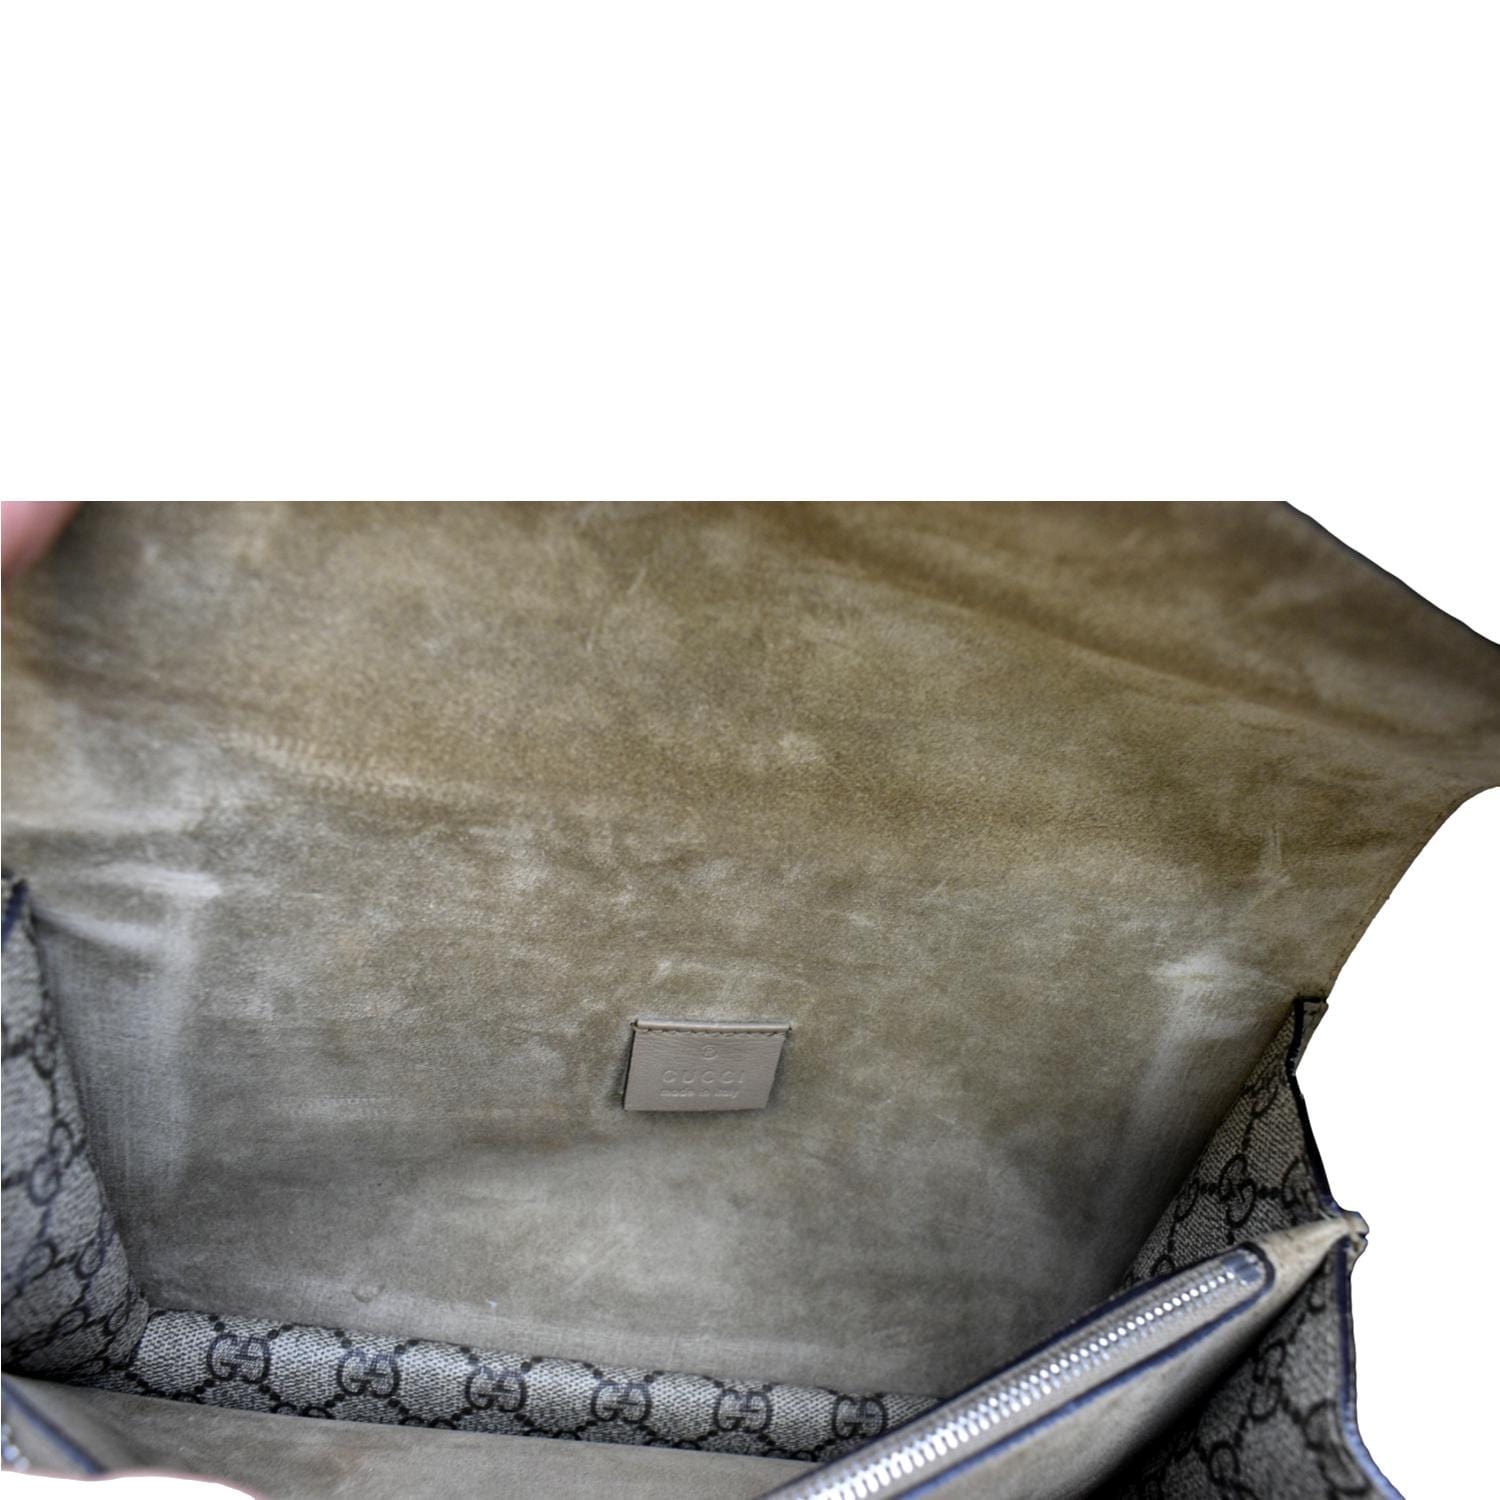 GUCCI Dionysus Small GG Supreme Canvas Shoulder Bag Beige 400249